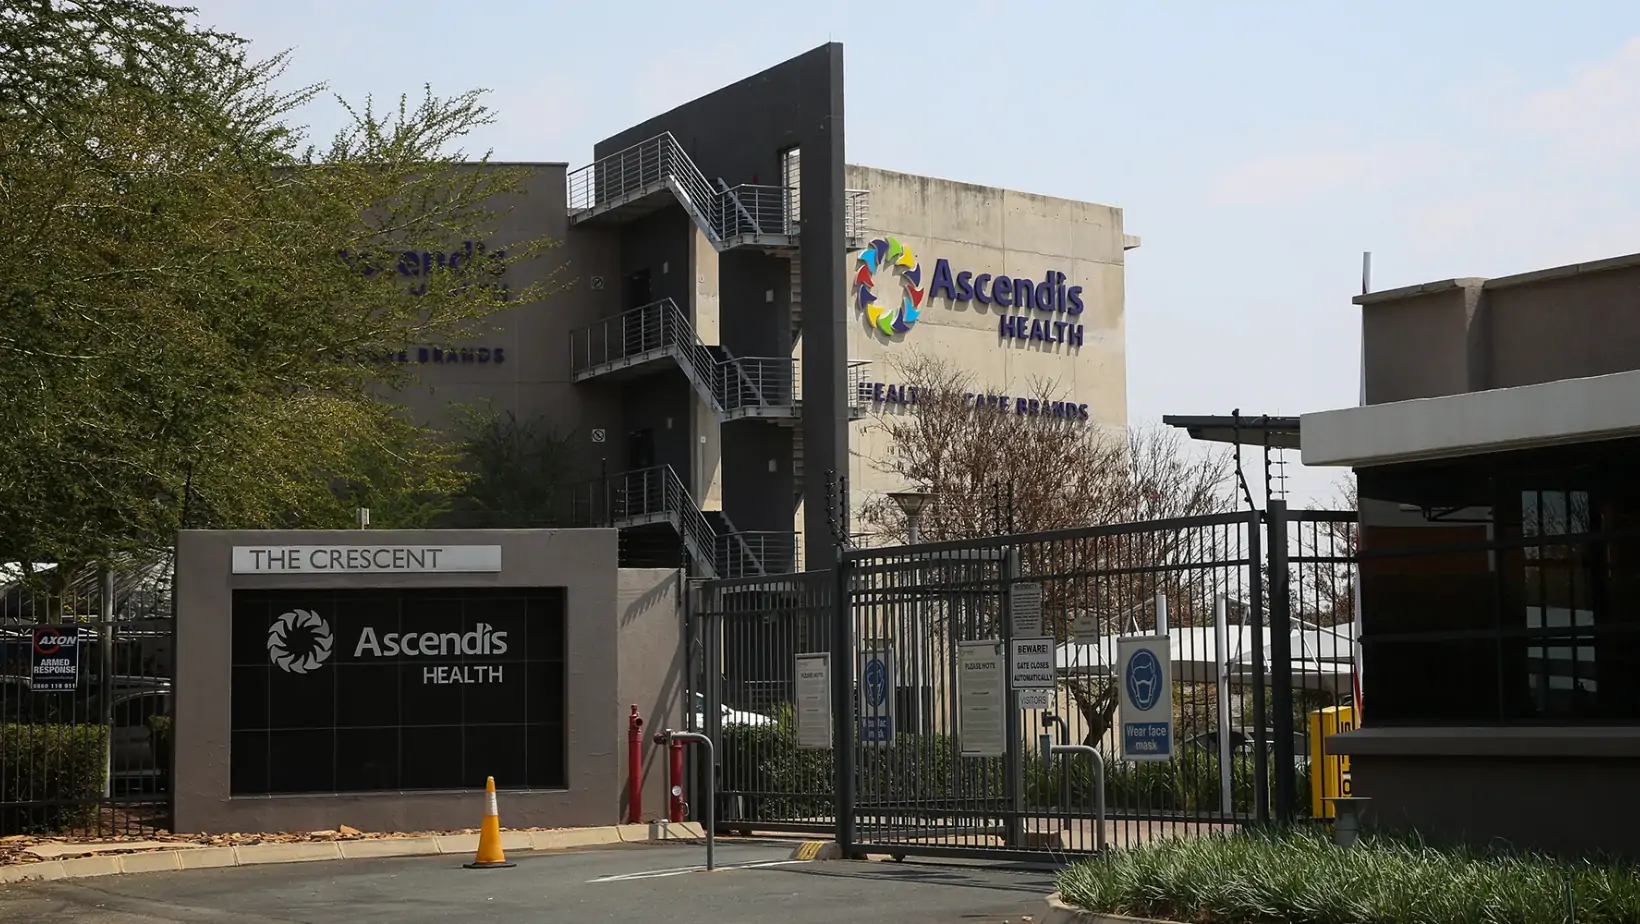 Ascendis Health Limited: Updated Disclosure and General Meeting Postponement